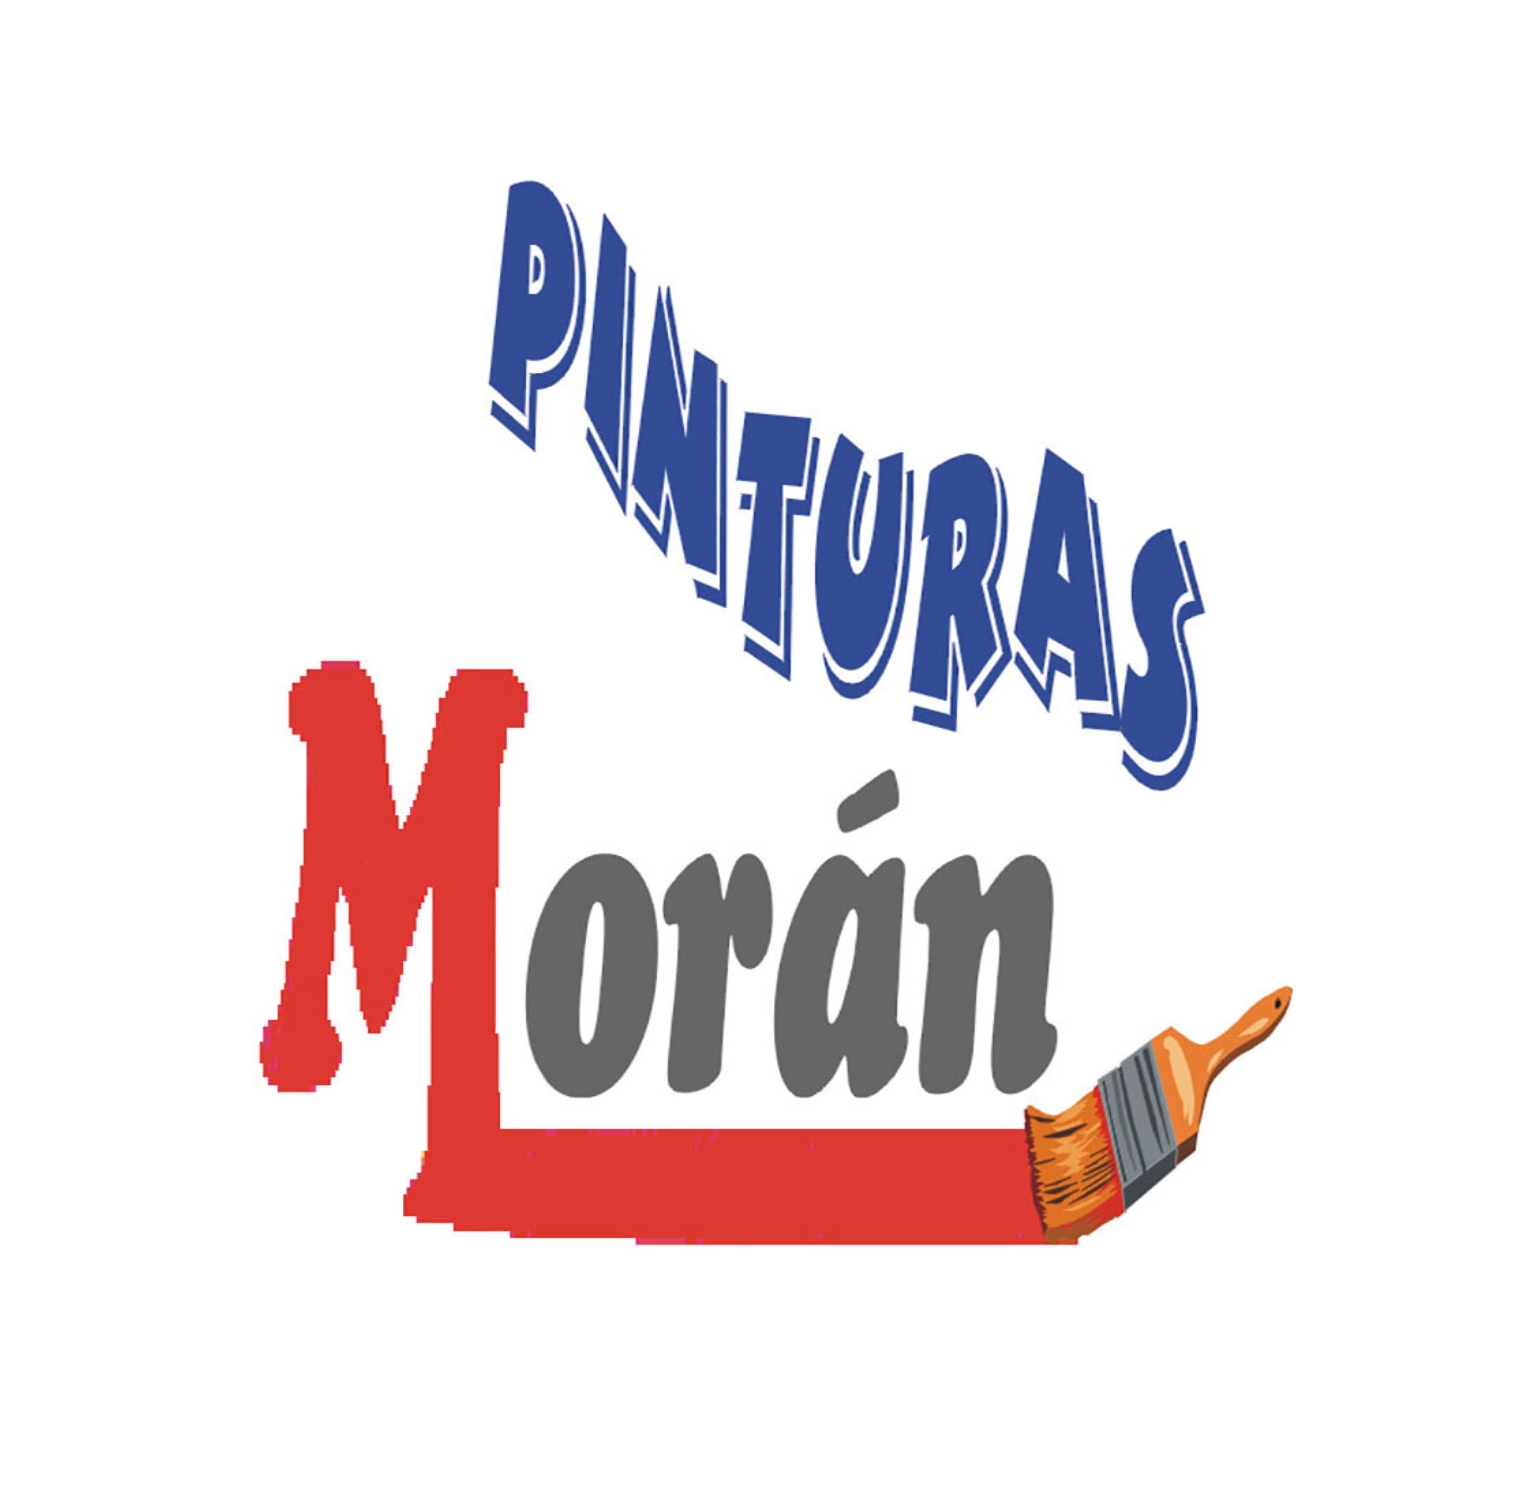 Pinturas Moran